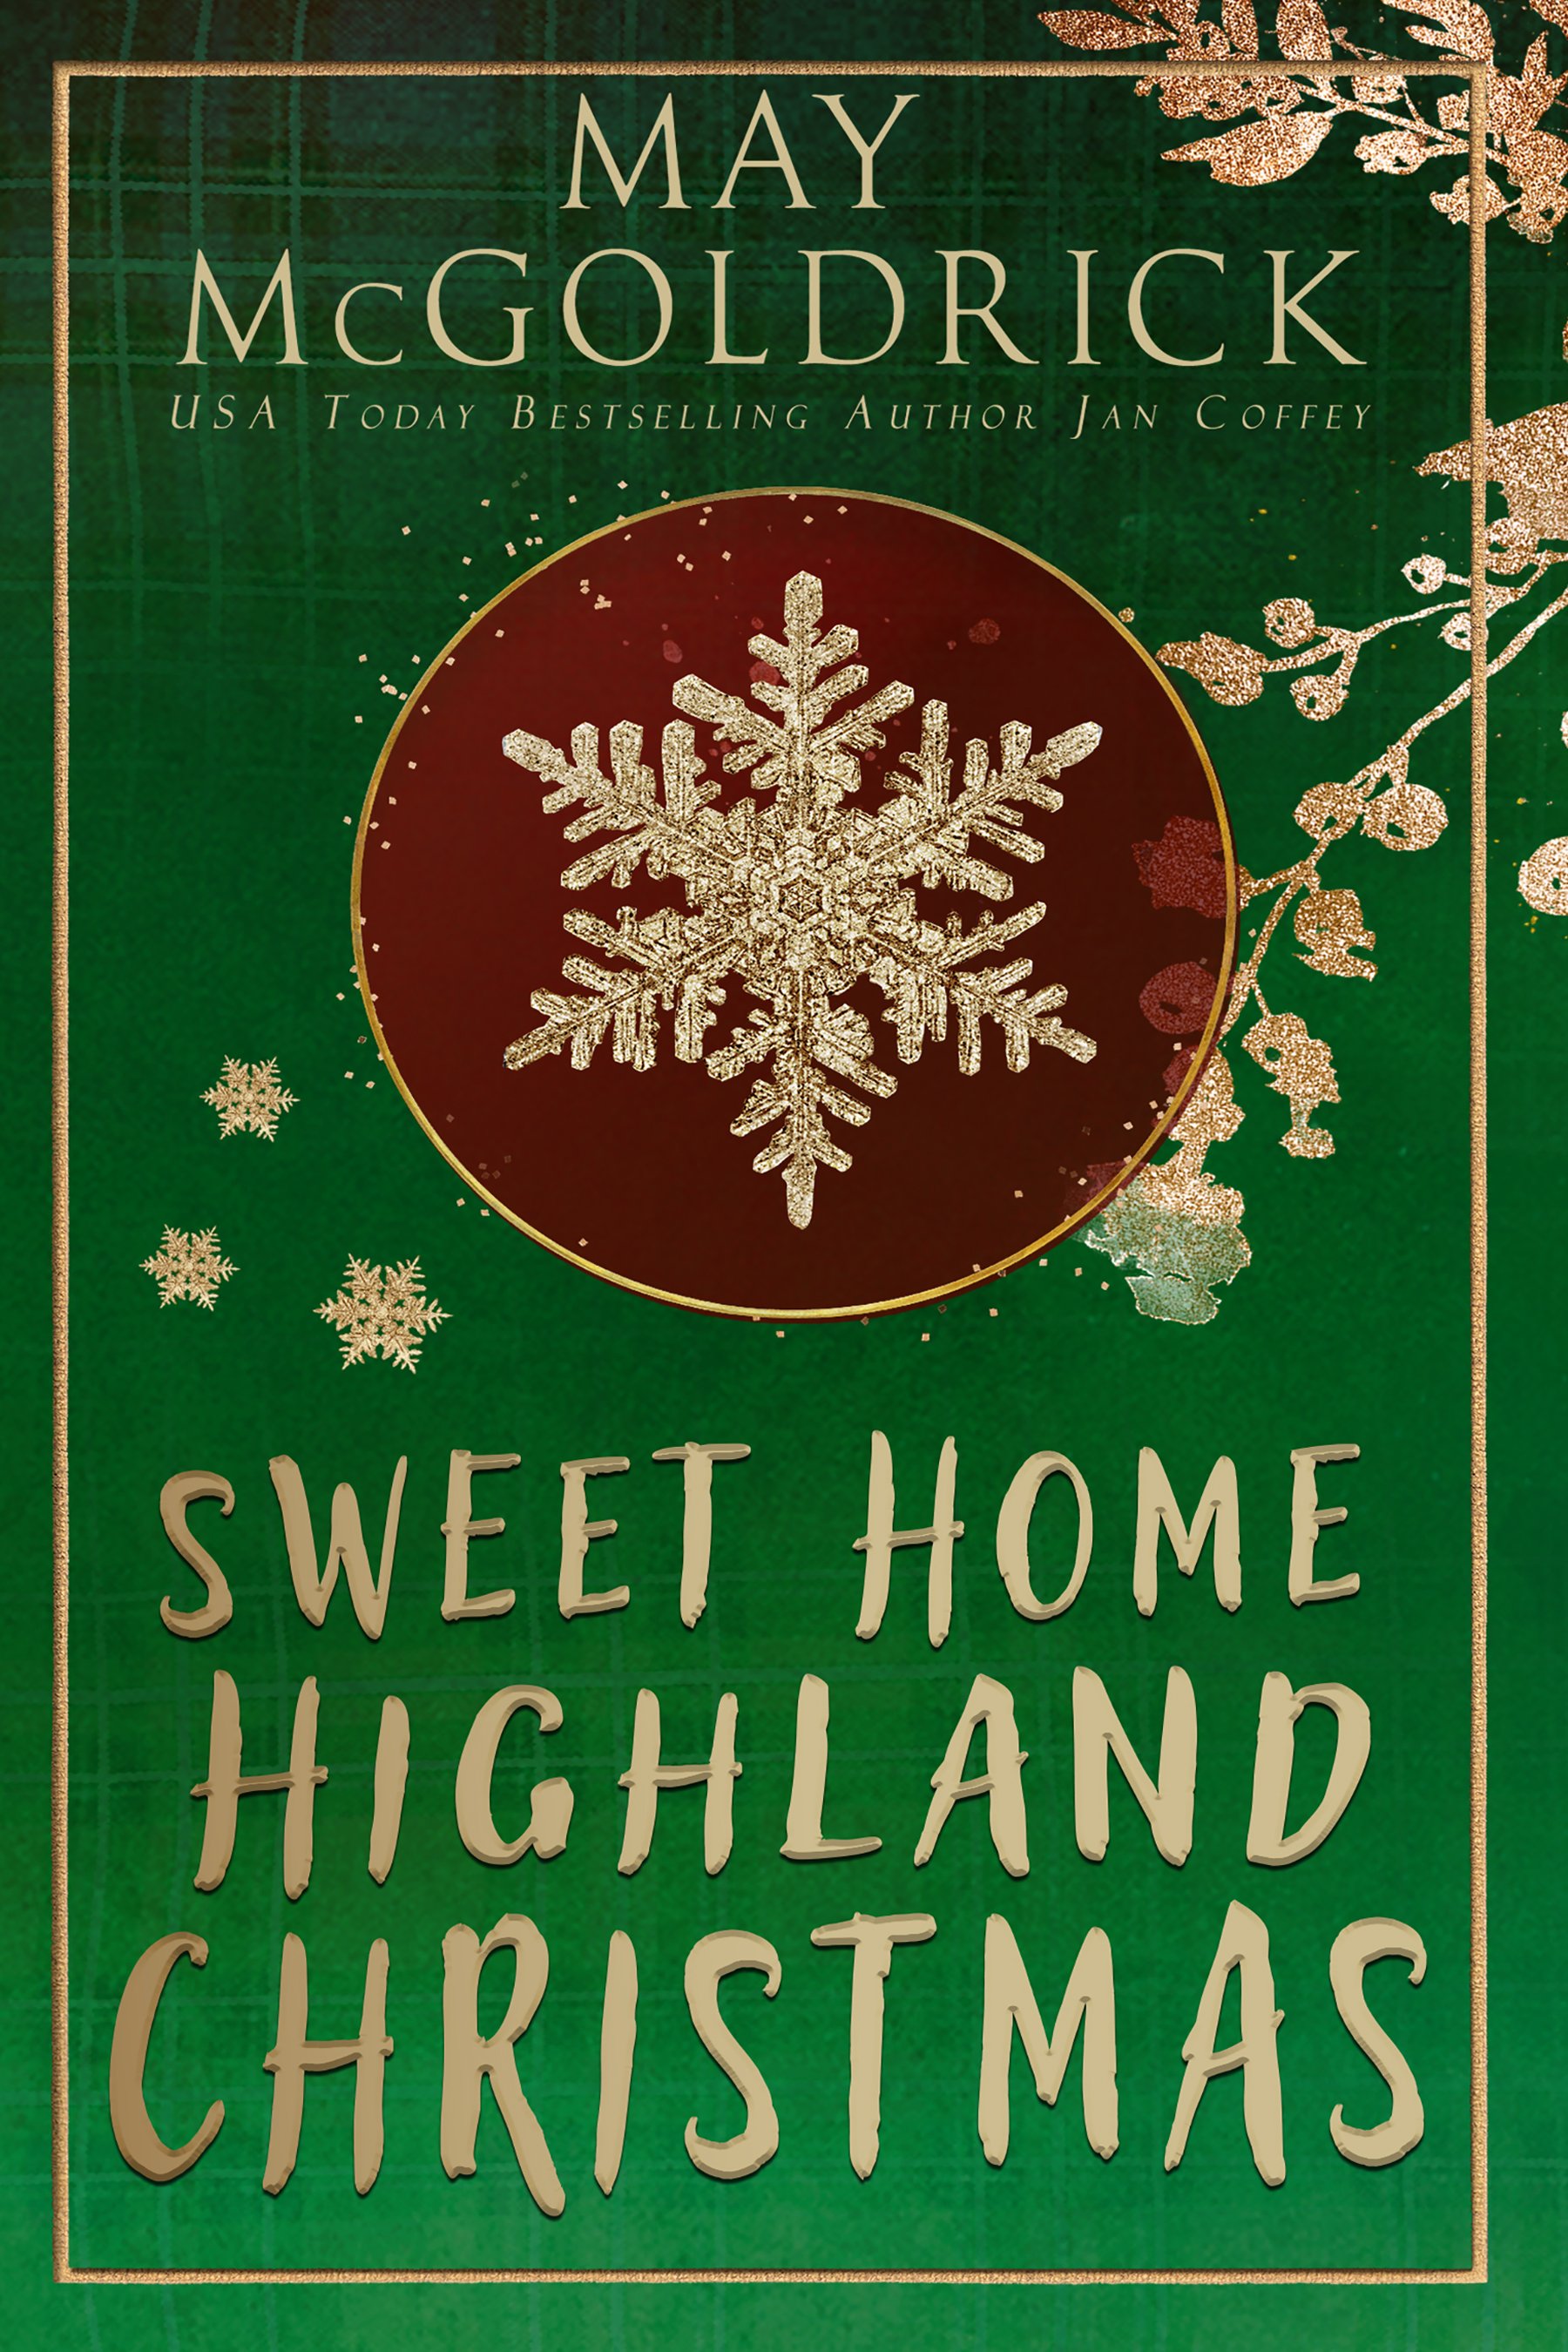 Sweet-Home-Highland-Christmas-web.jpg